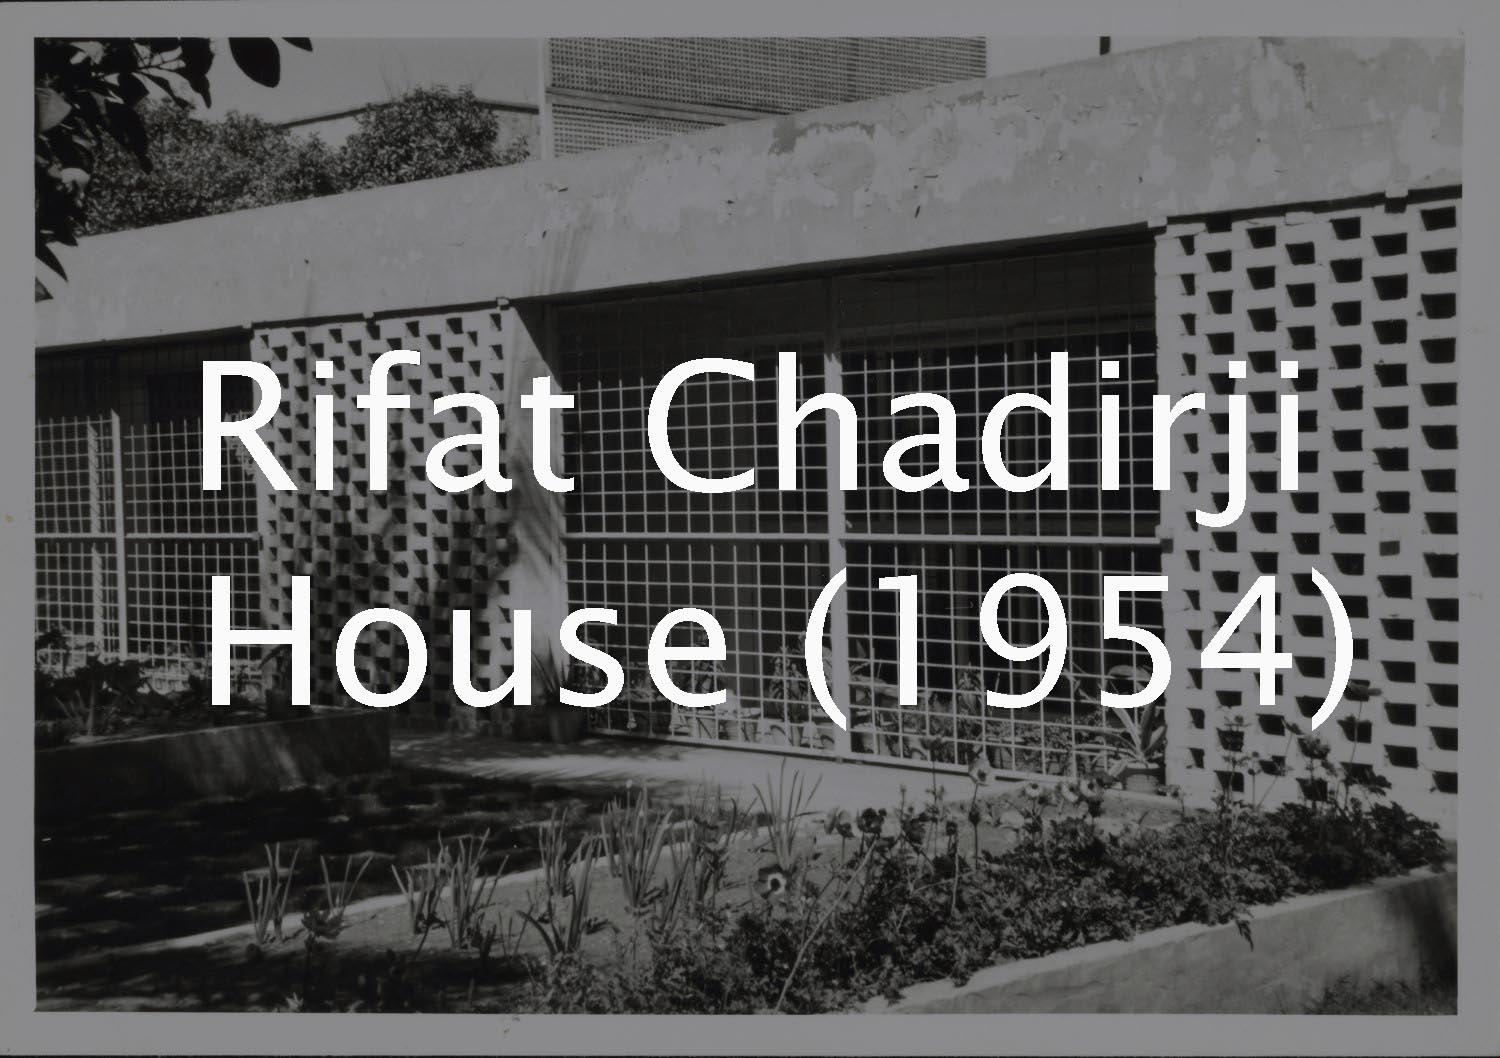 Rifat Chadirji House (Rifat Chadirji Archive)